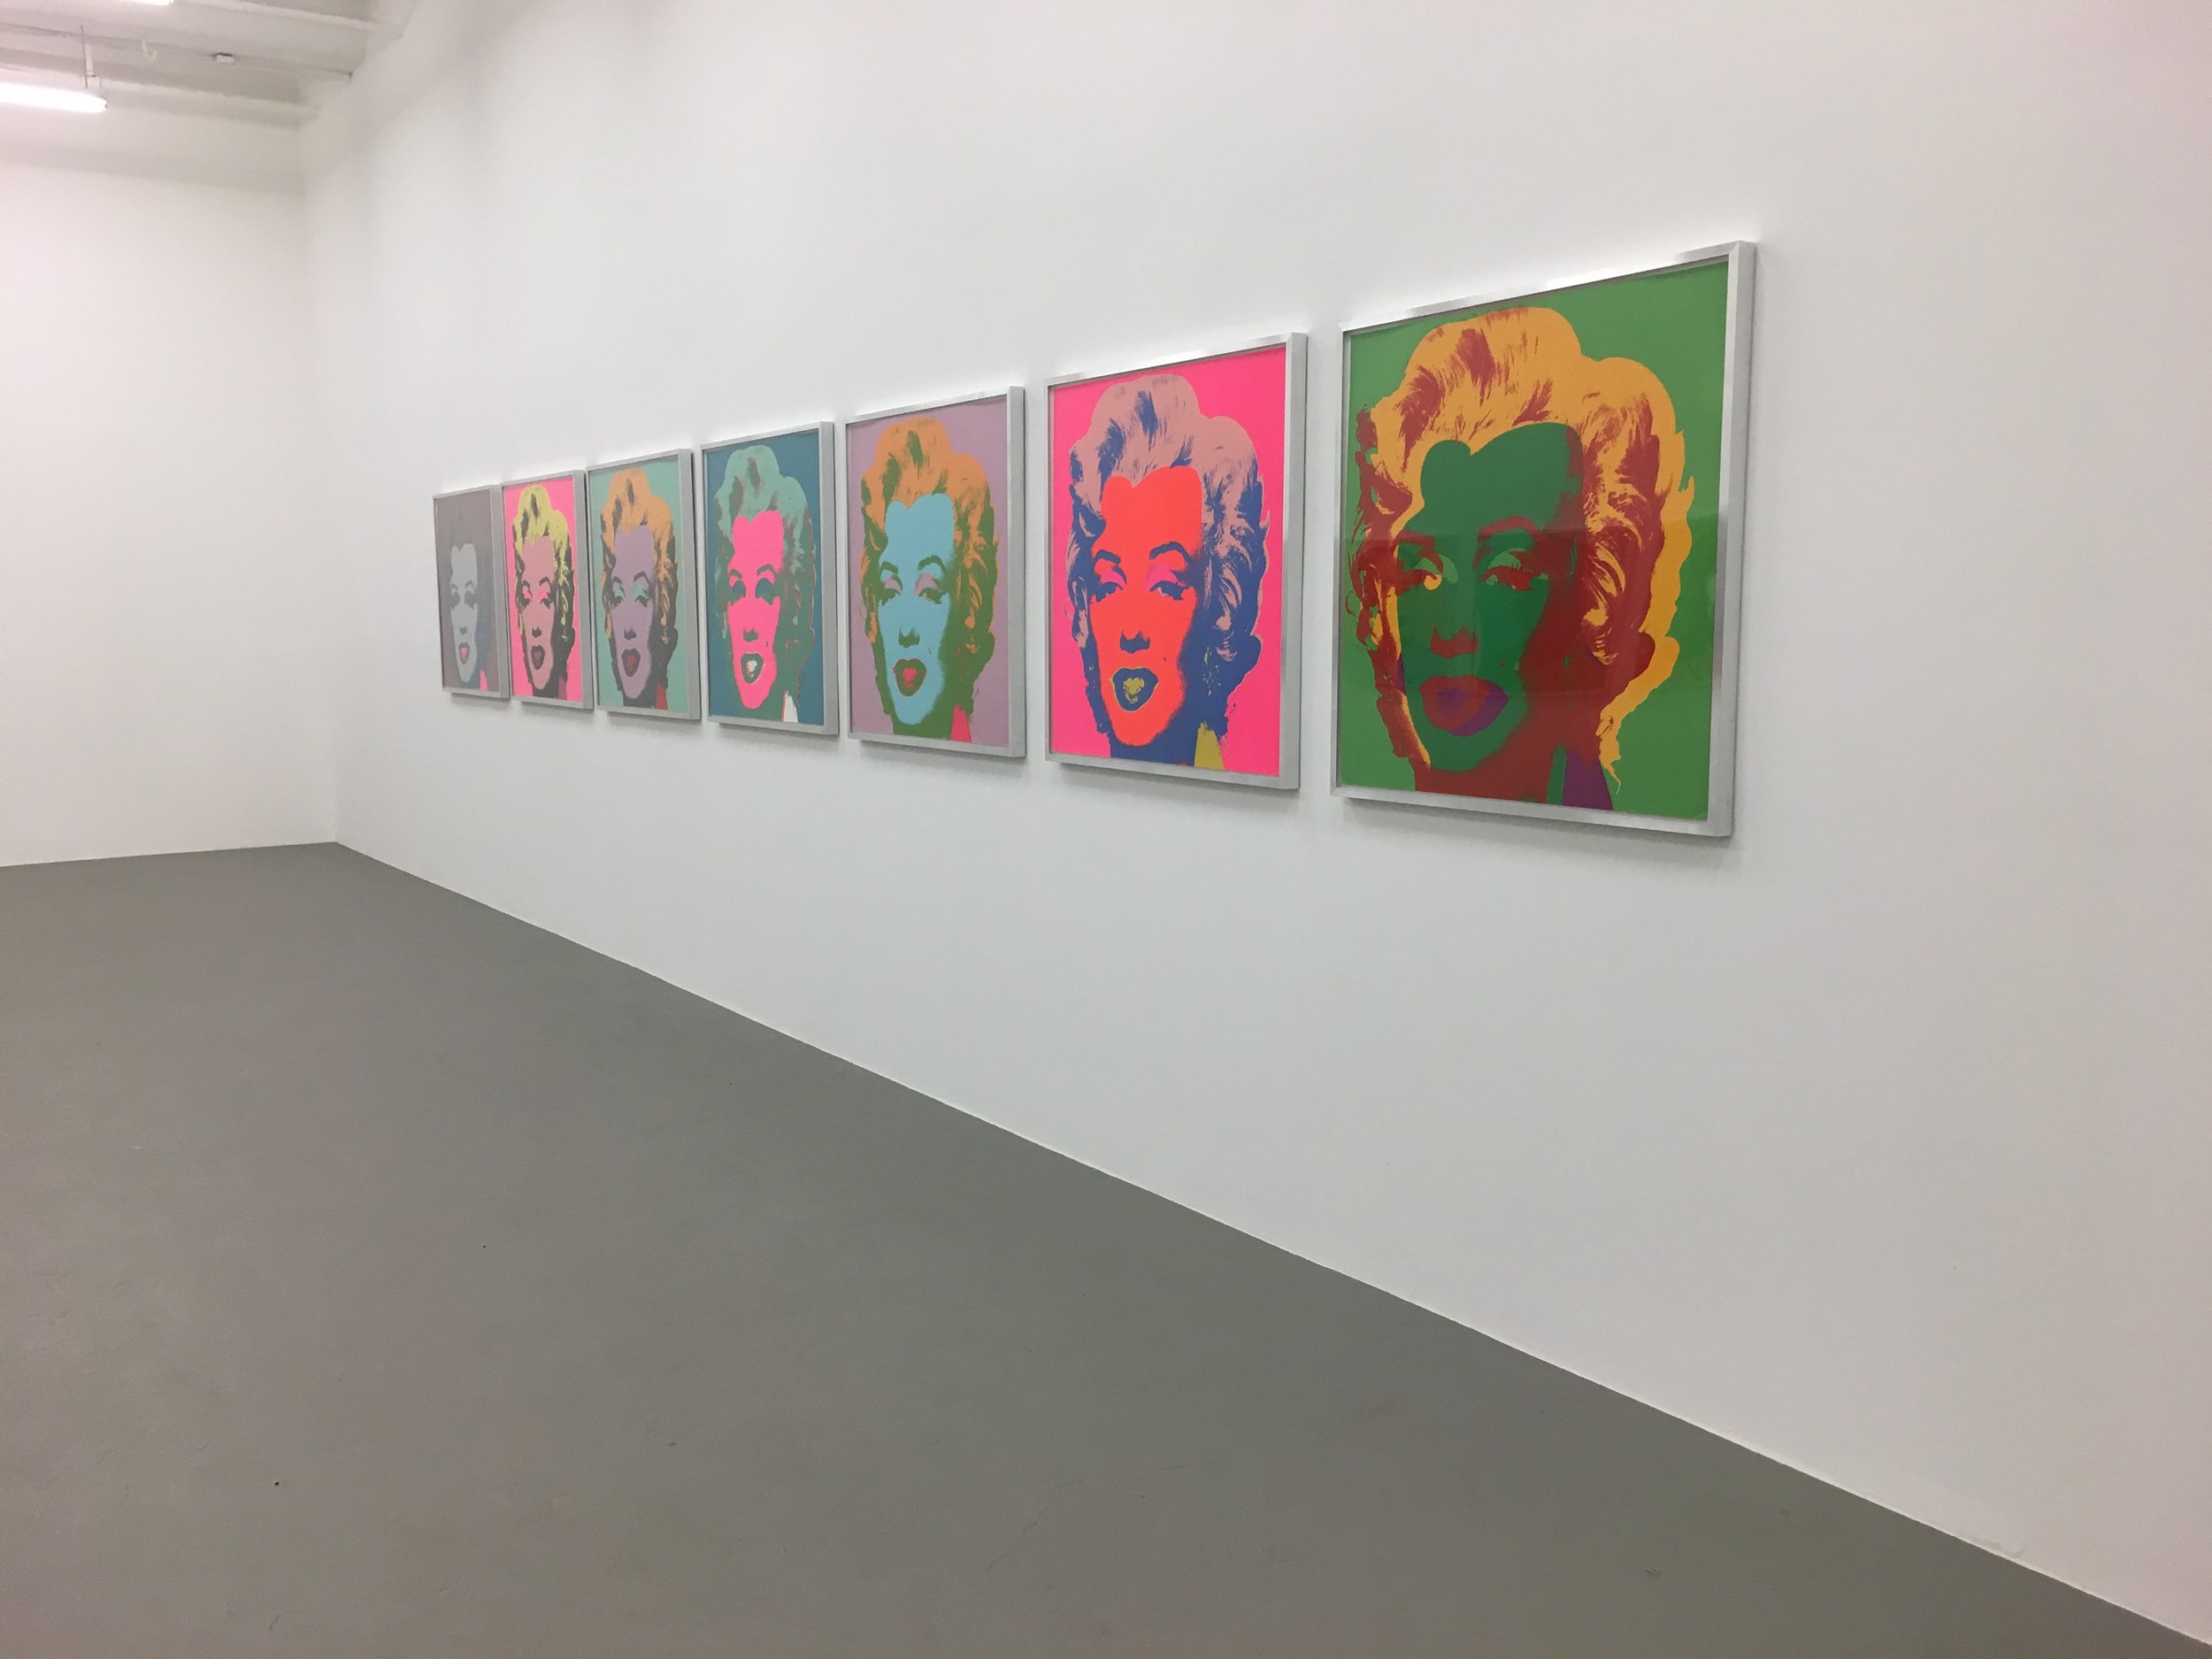  Andy Warhol silkscreens at the Ayn Foundation, Mana Contemporary 